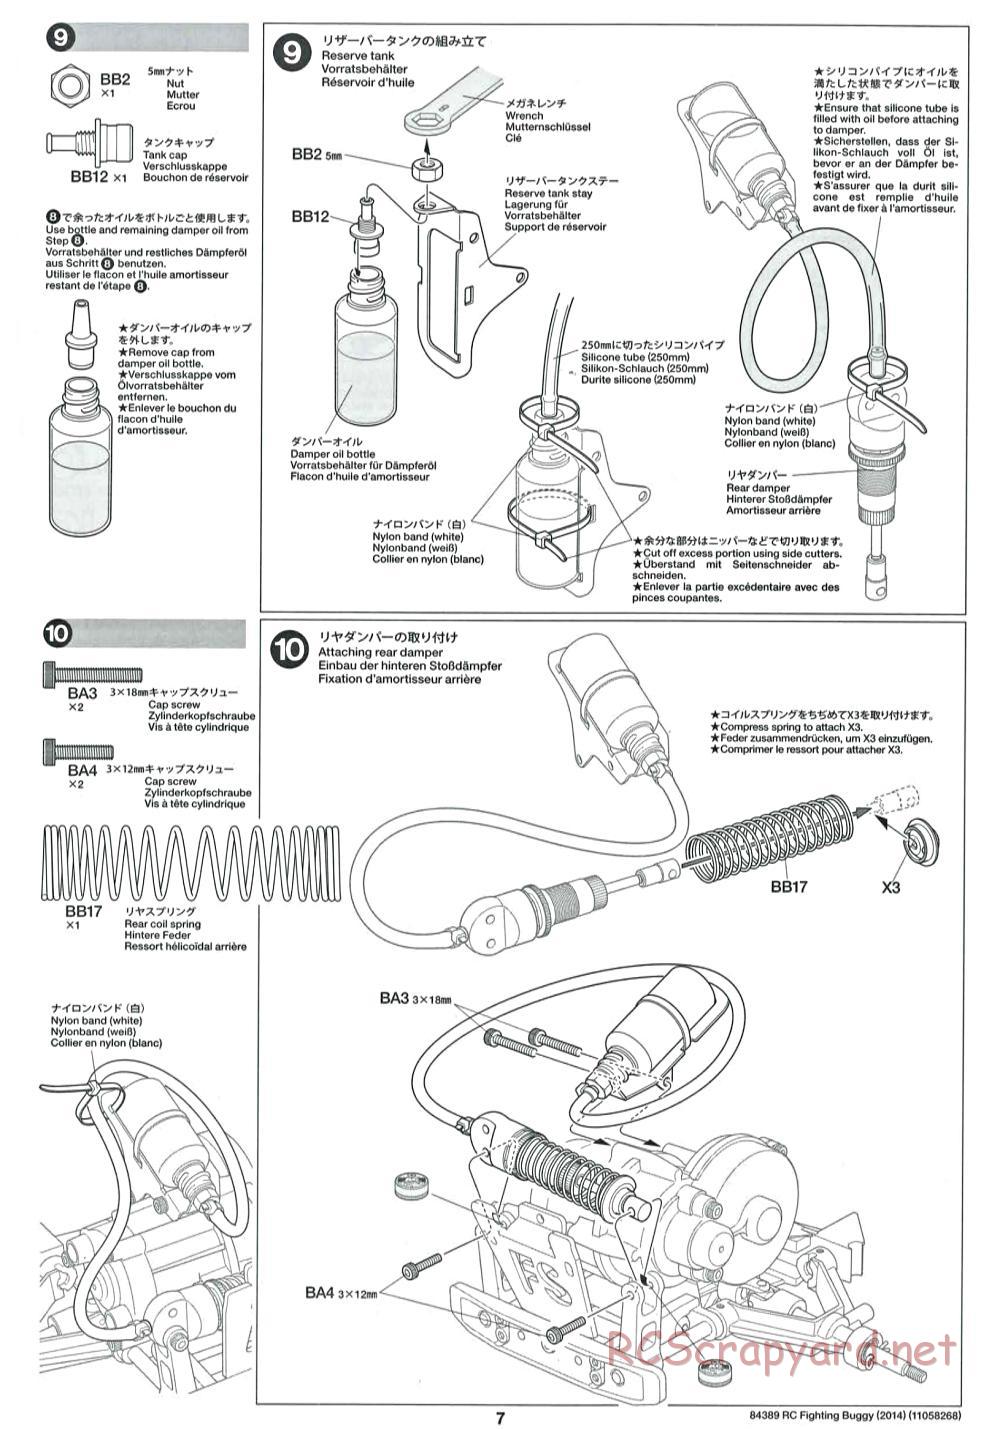 Tamiya - Fighting Buggy (2014) Chassis - Manual - Page 7